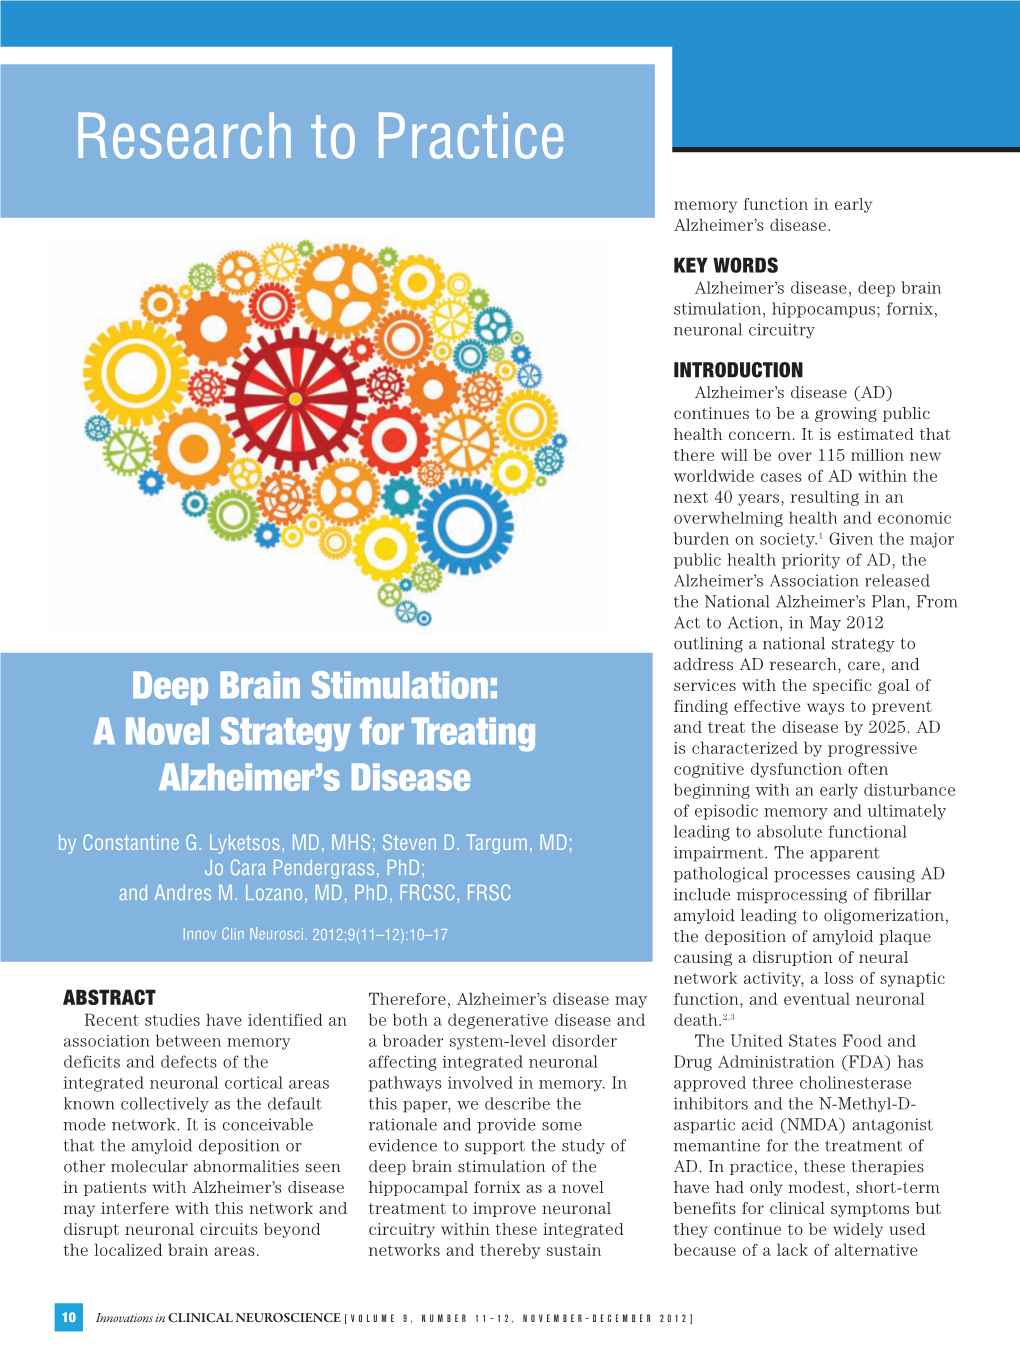 Deep Brain Stimulation: a Novel Strategy for Treating Alzheimer's